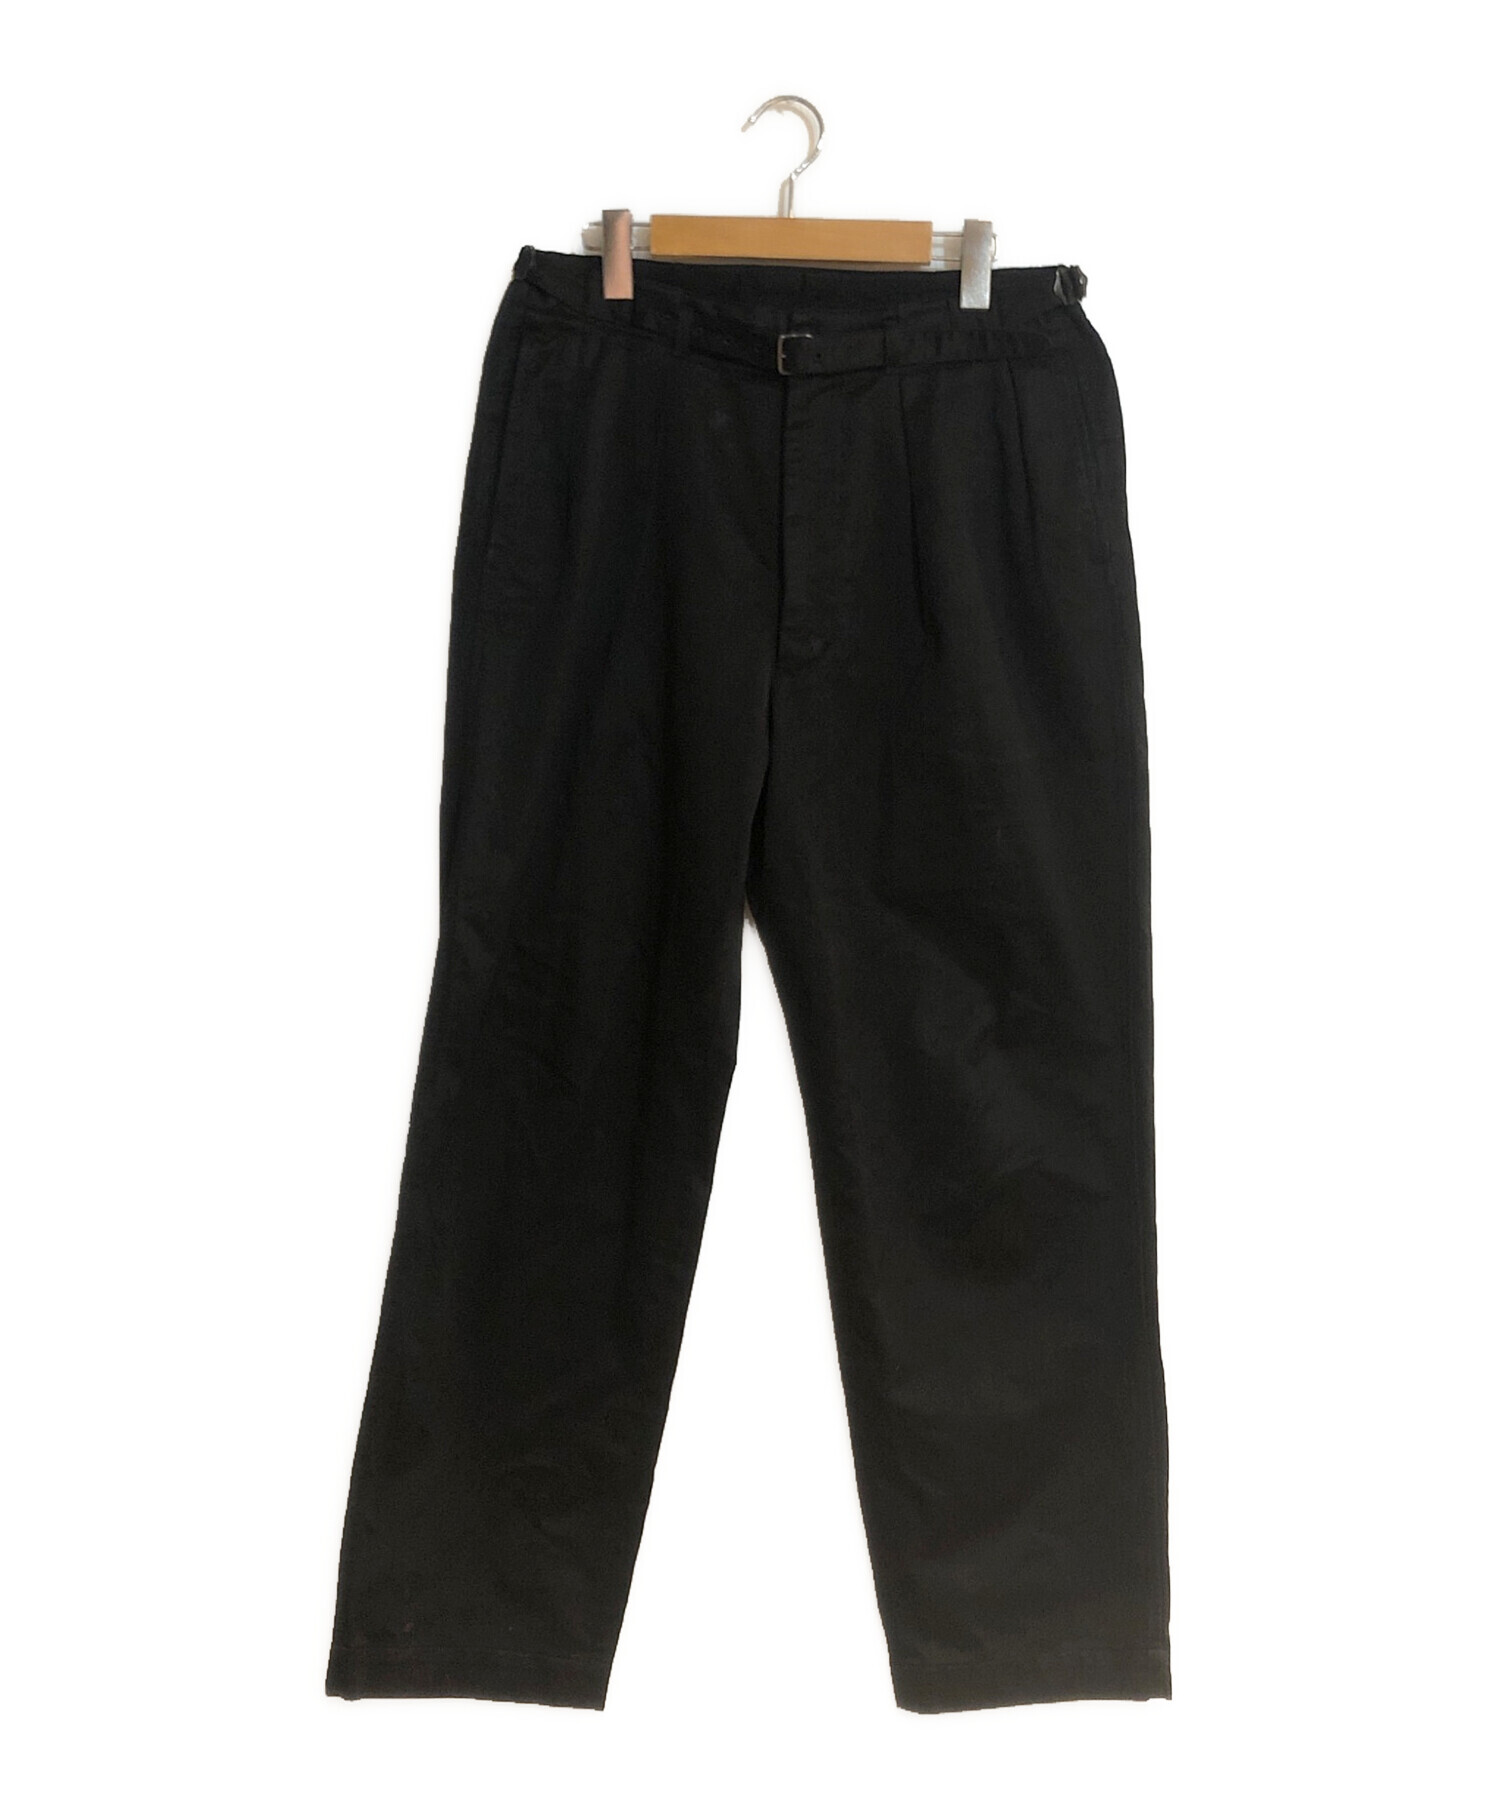 KAPTAIN SUNSHINE (キャプテンサンシャイン) Gurkha Trousers/グルカトラウザーズ ブラック サイズ:SIZE 32